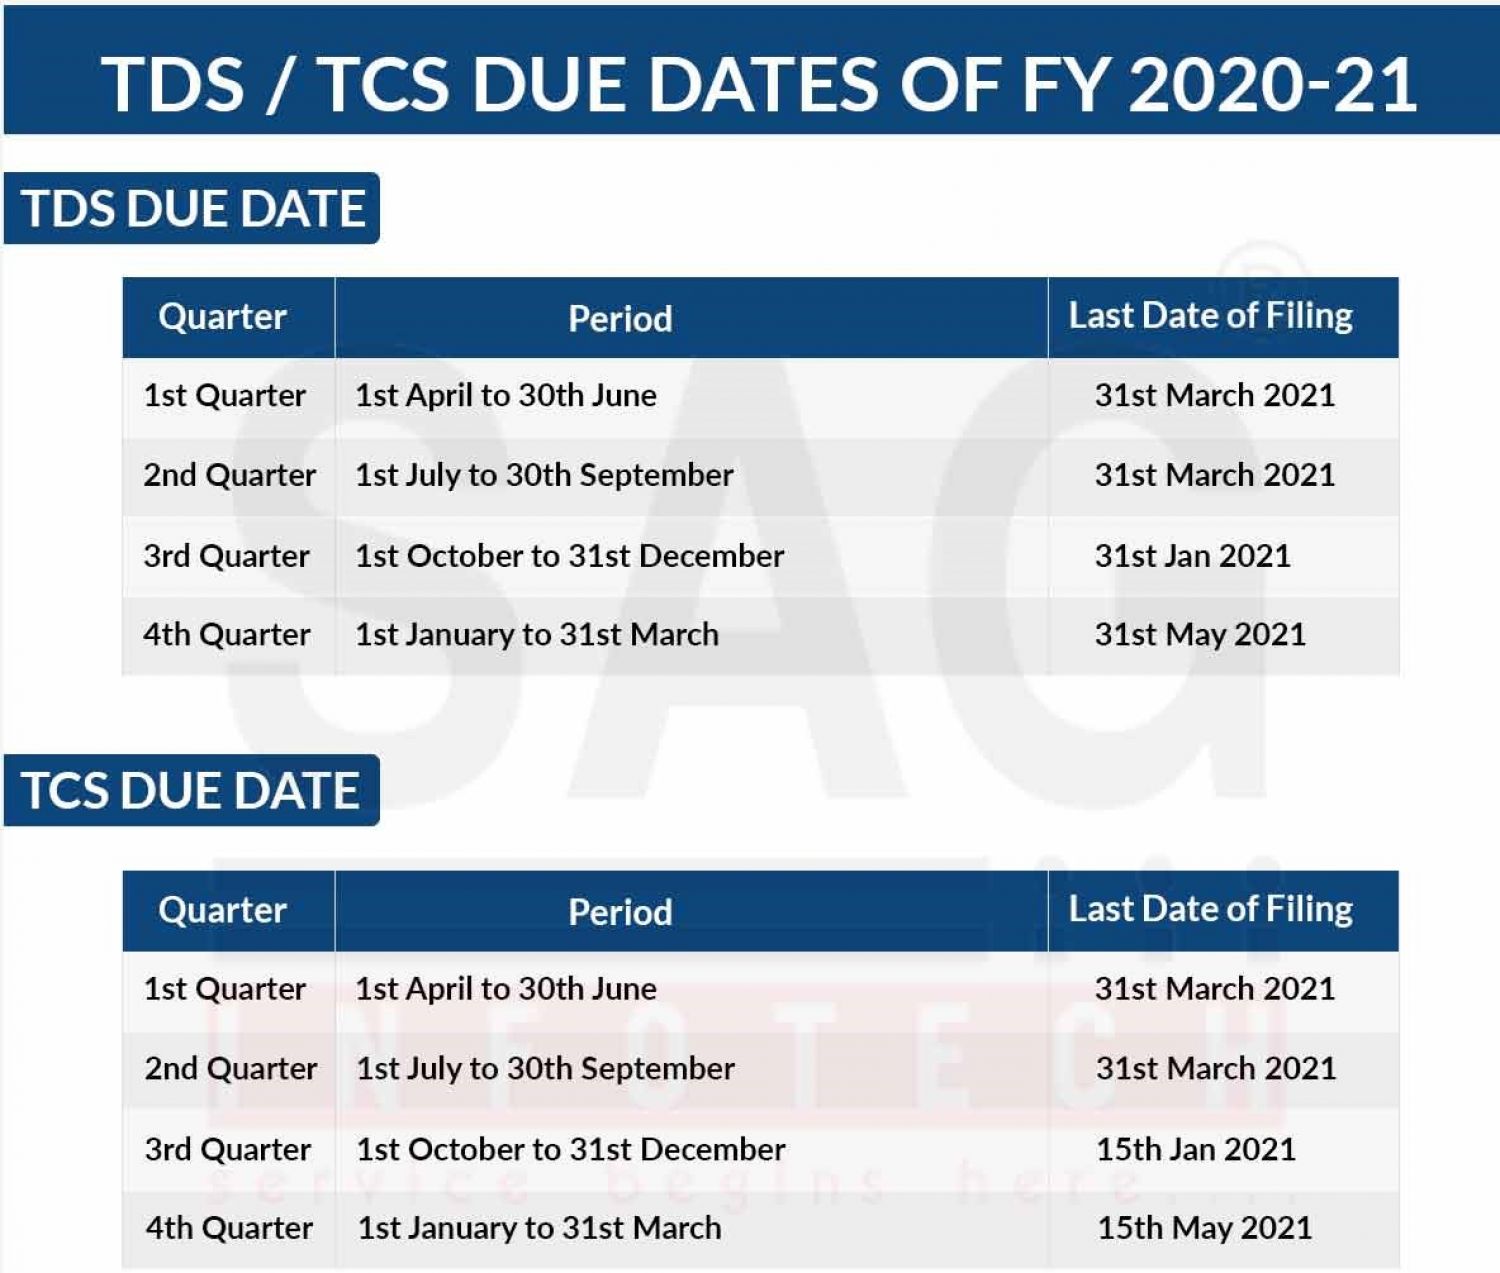 NSDL: Extension of QTR TDS/TCS statement filing dates for Quarter 